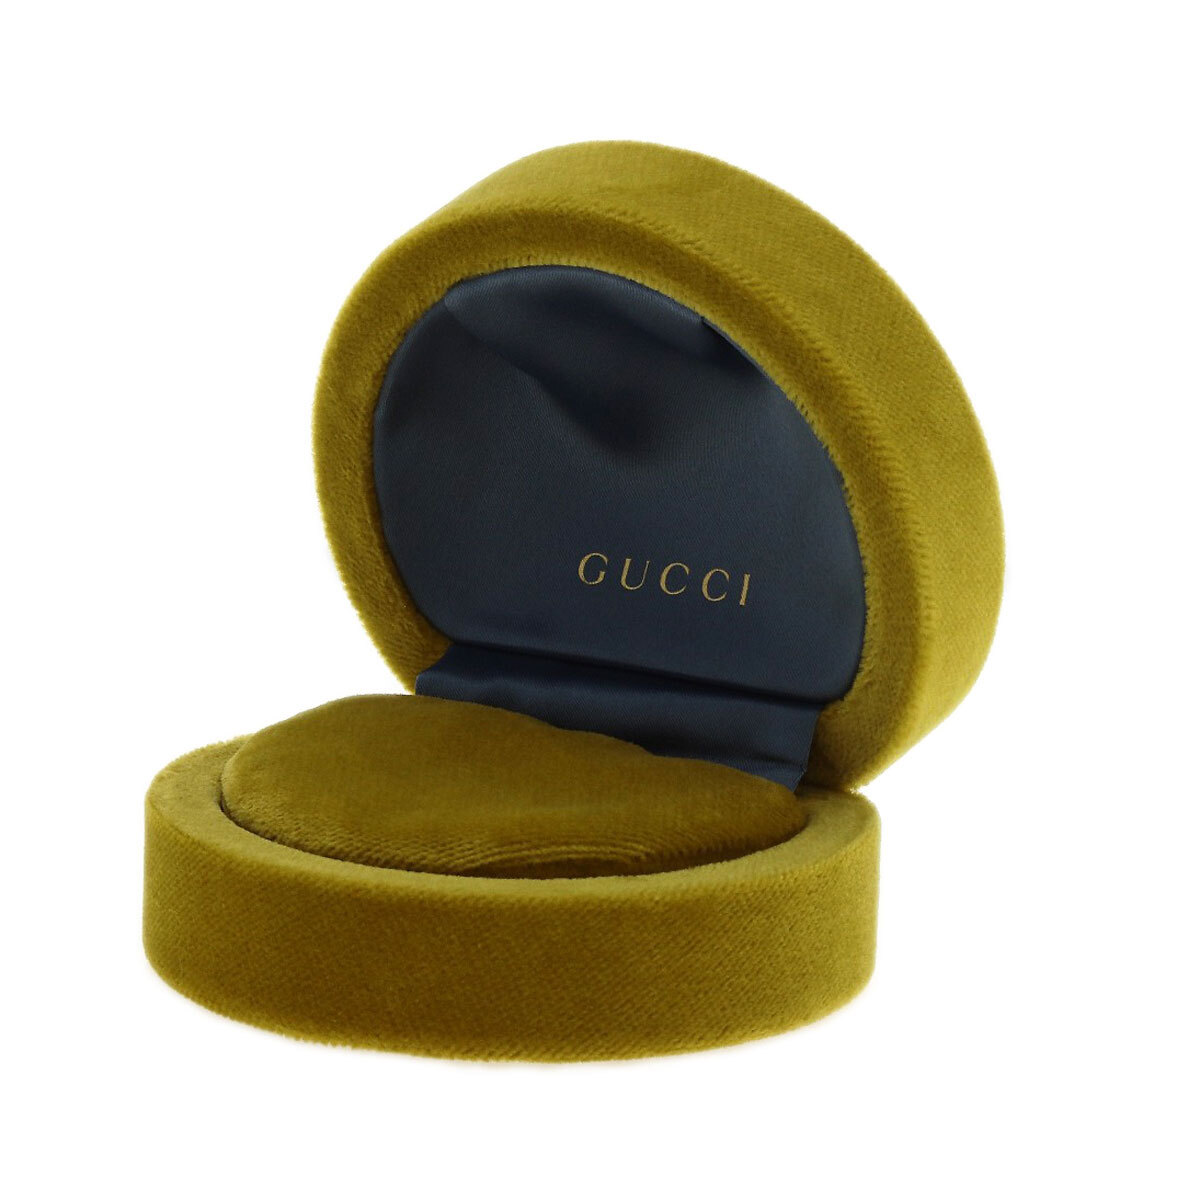 GUCCI Gucci Icon Bloom s колье K18 белое золото женский б/у 